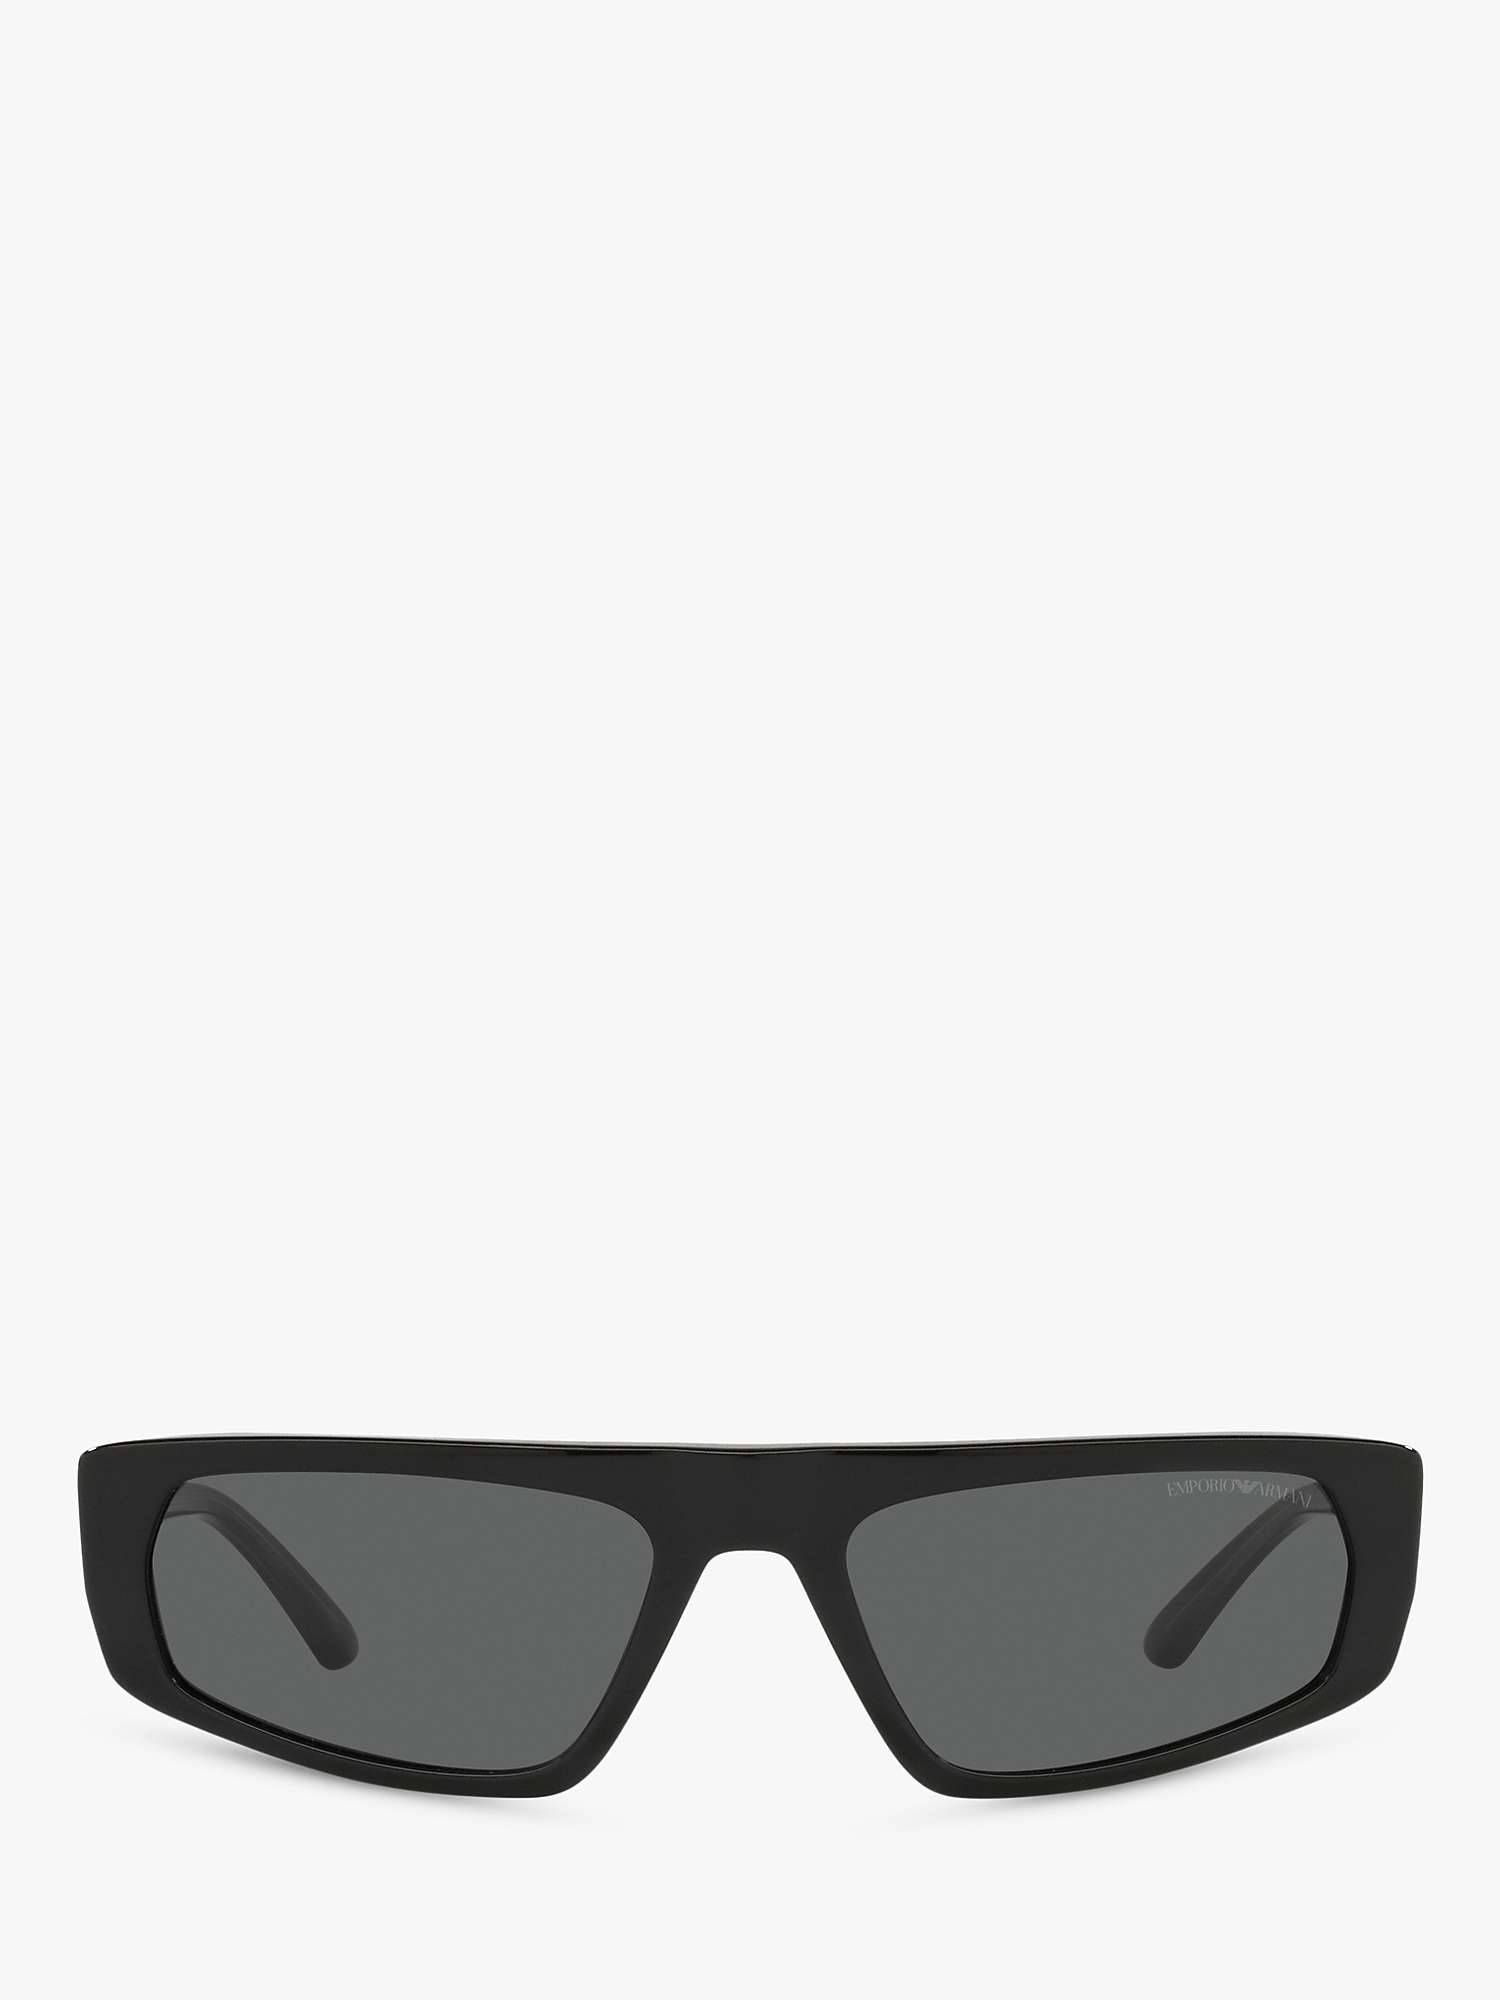 Buy Emporio Armani EA4168 Men's Pillow Sunglasses, Black/Grey Online at johnlewis.com